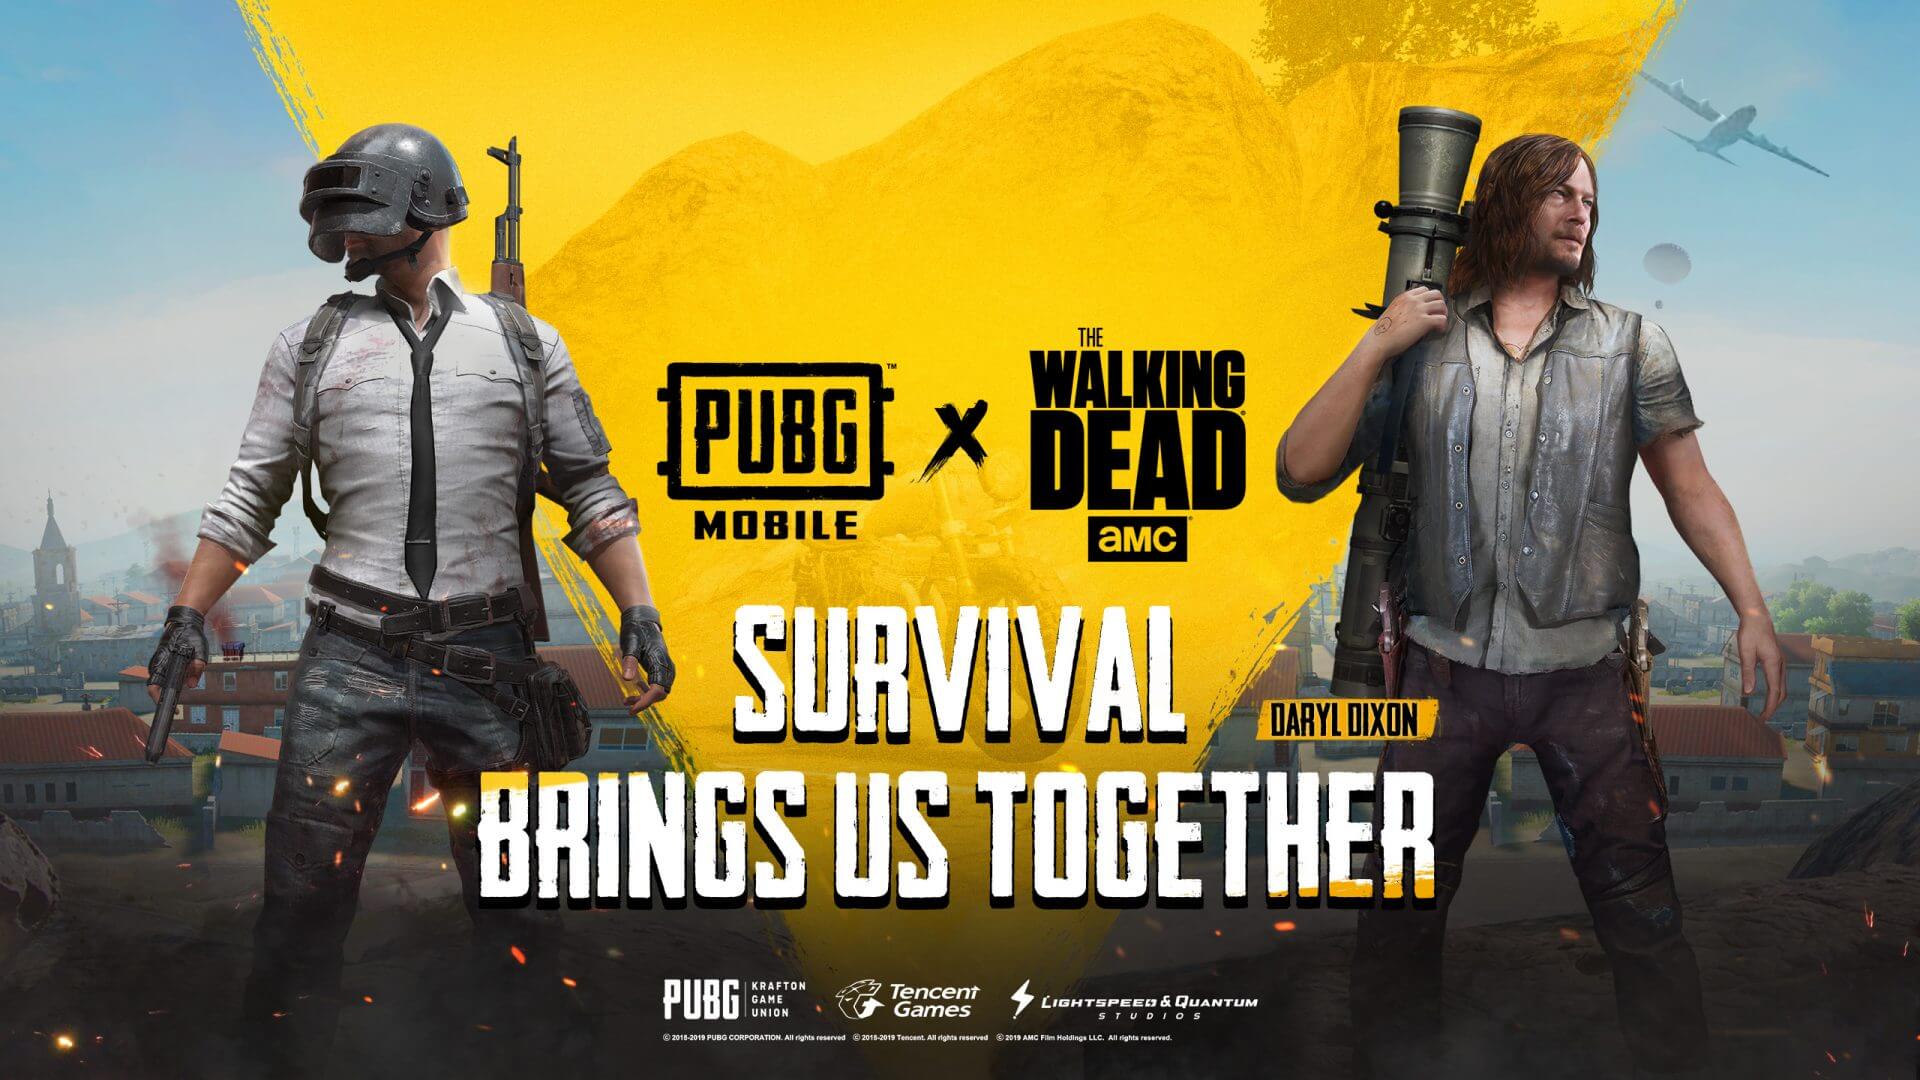 PUBG Mobile The Walking Dead Collaboration